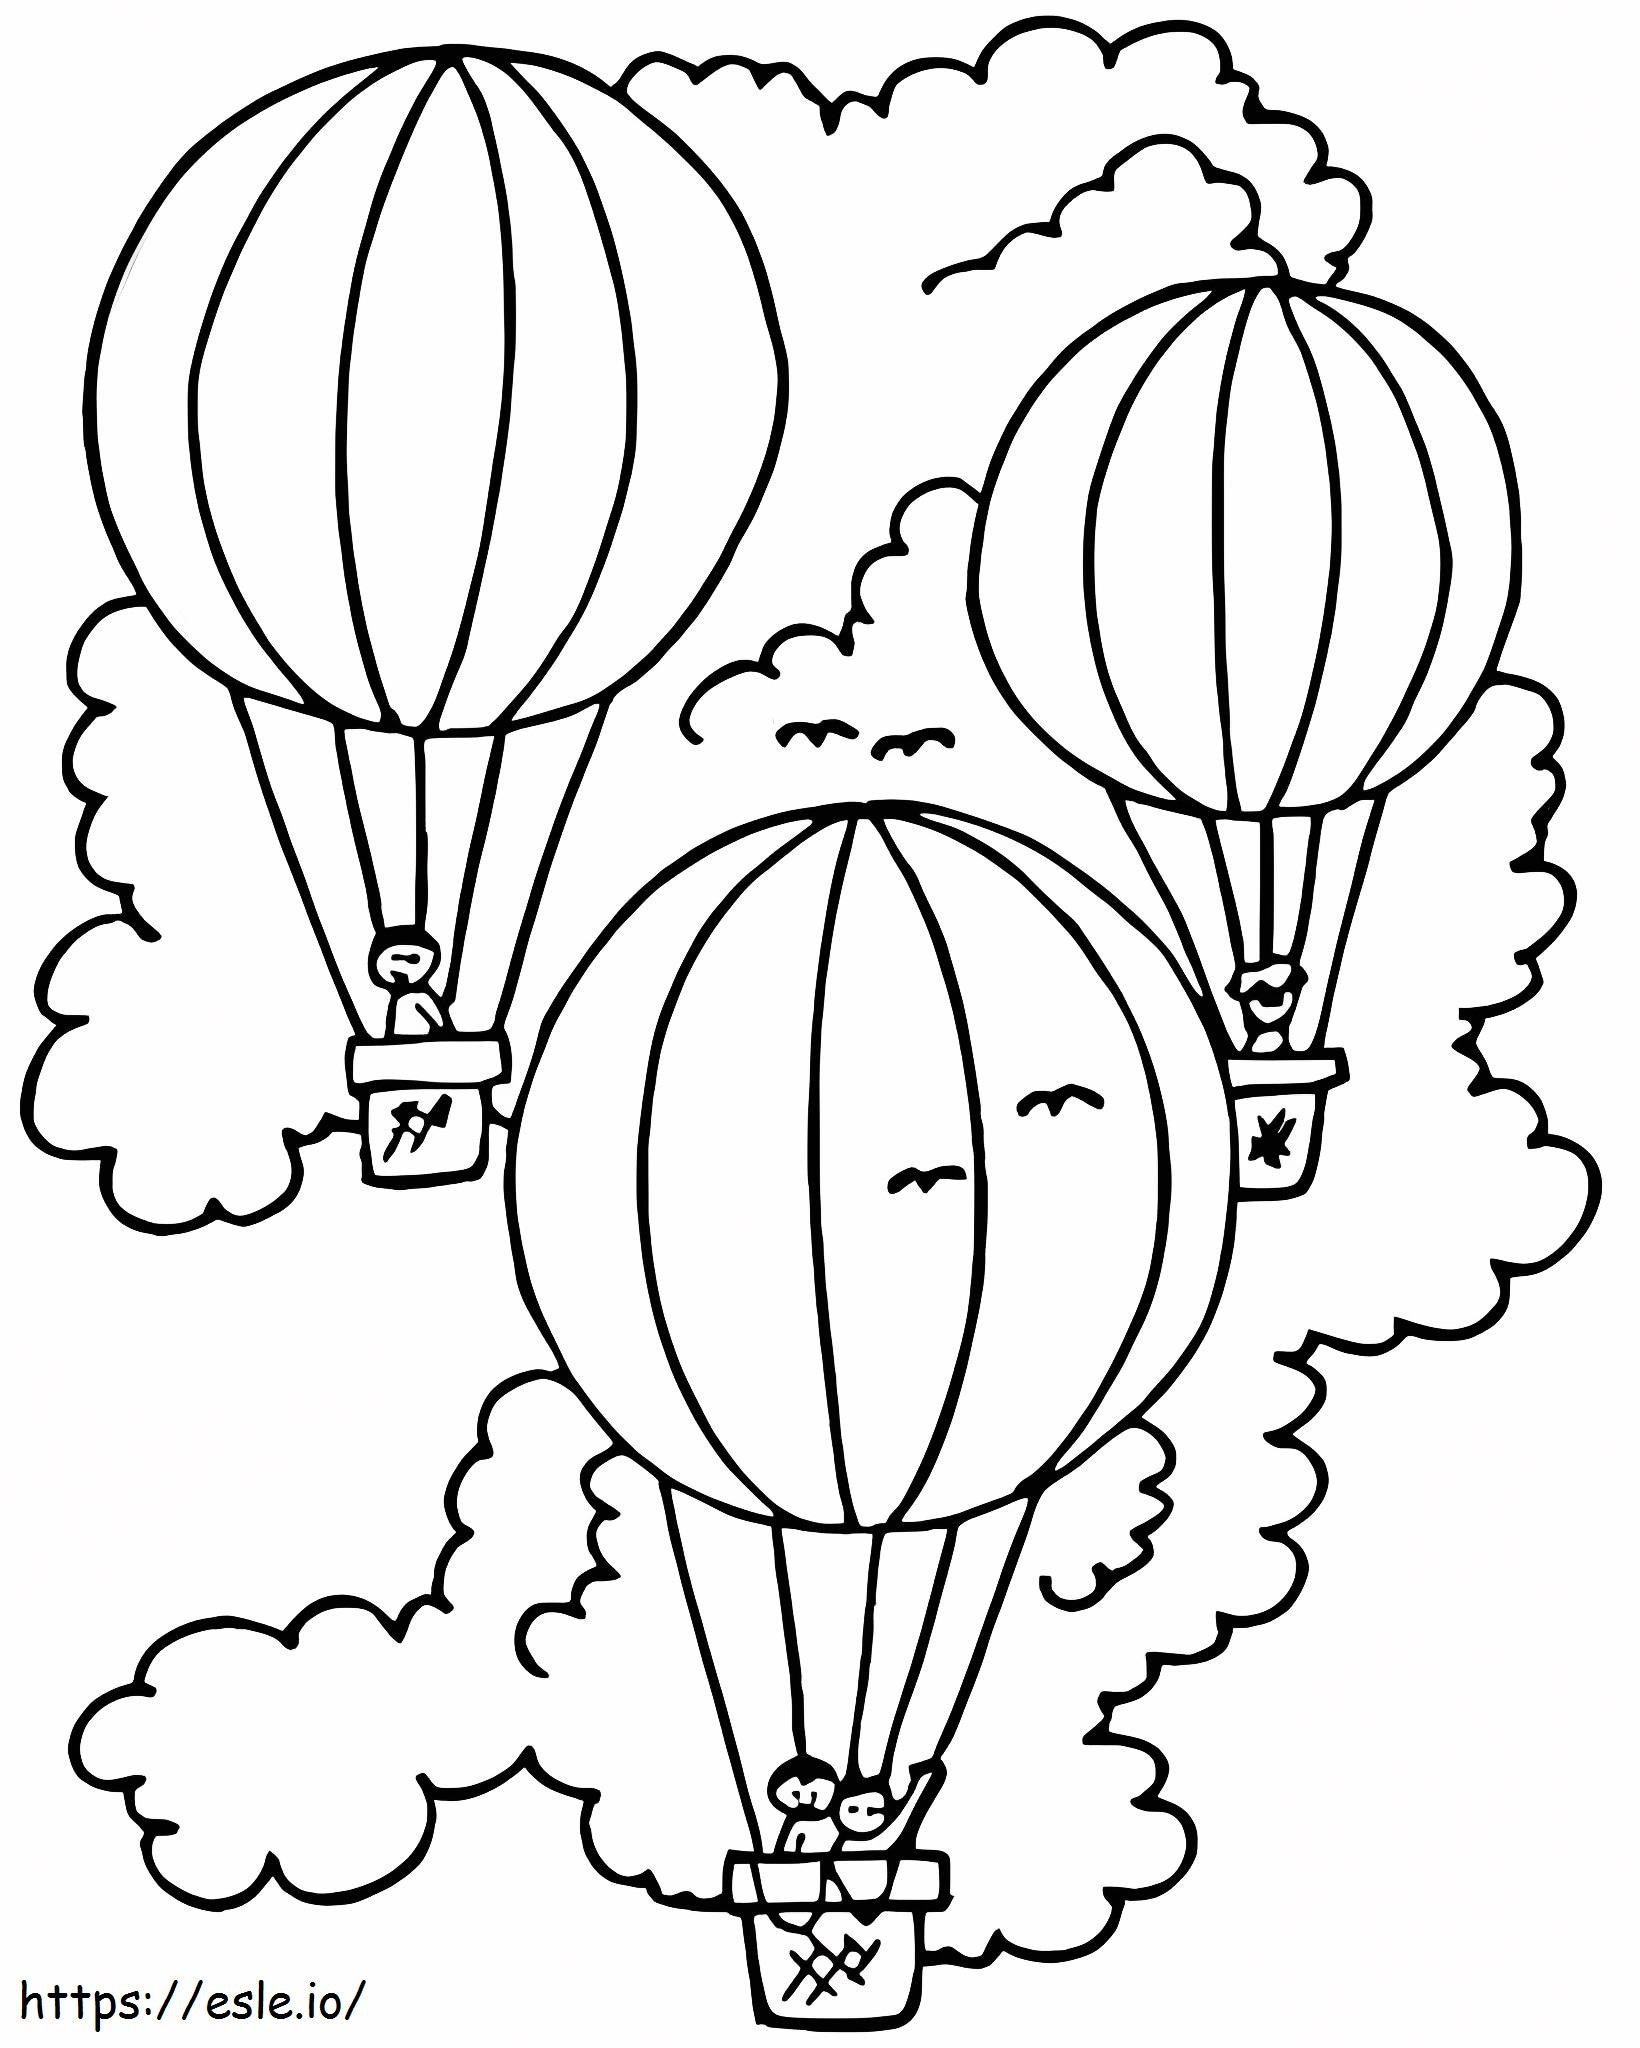 Tiga Balon Udara Panas 1 Gambar Mewarnai